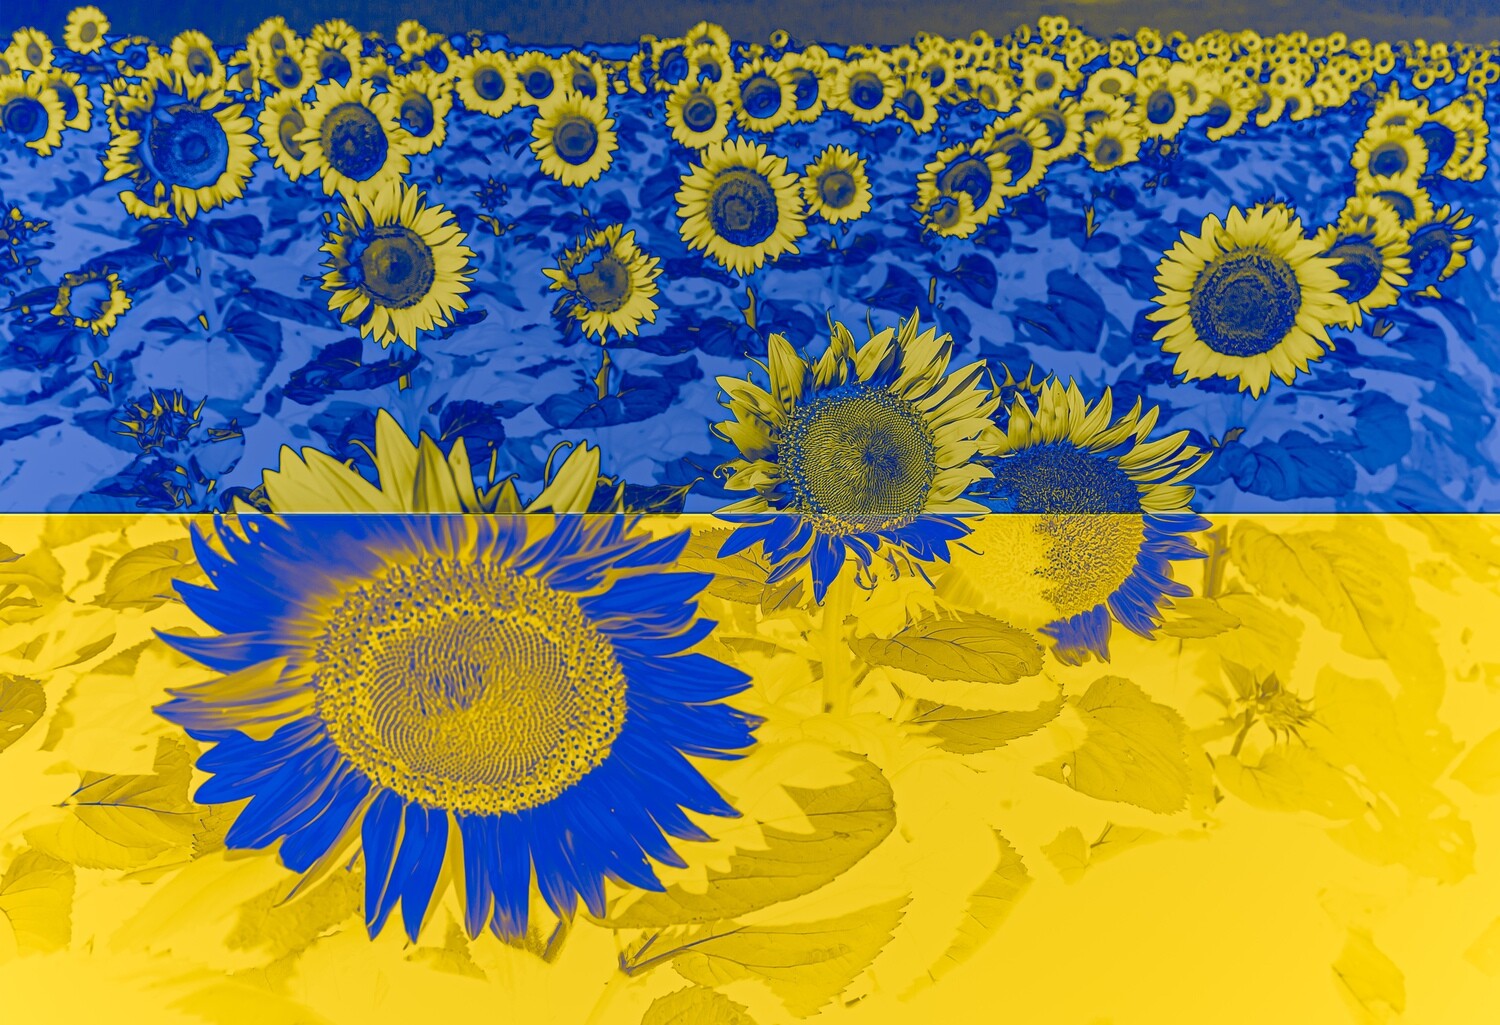 "Ukrainian" Sunflowers